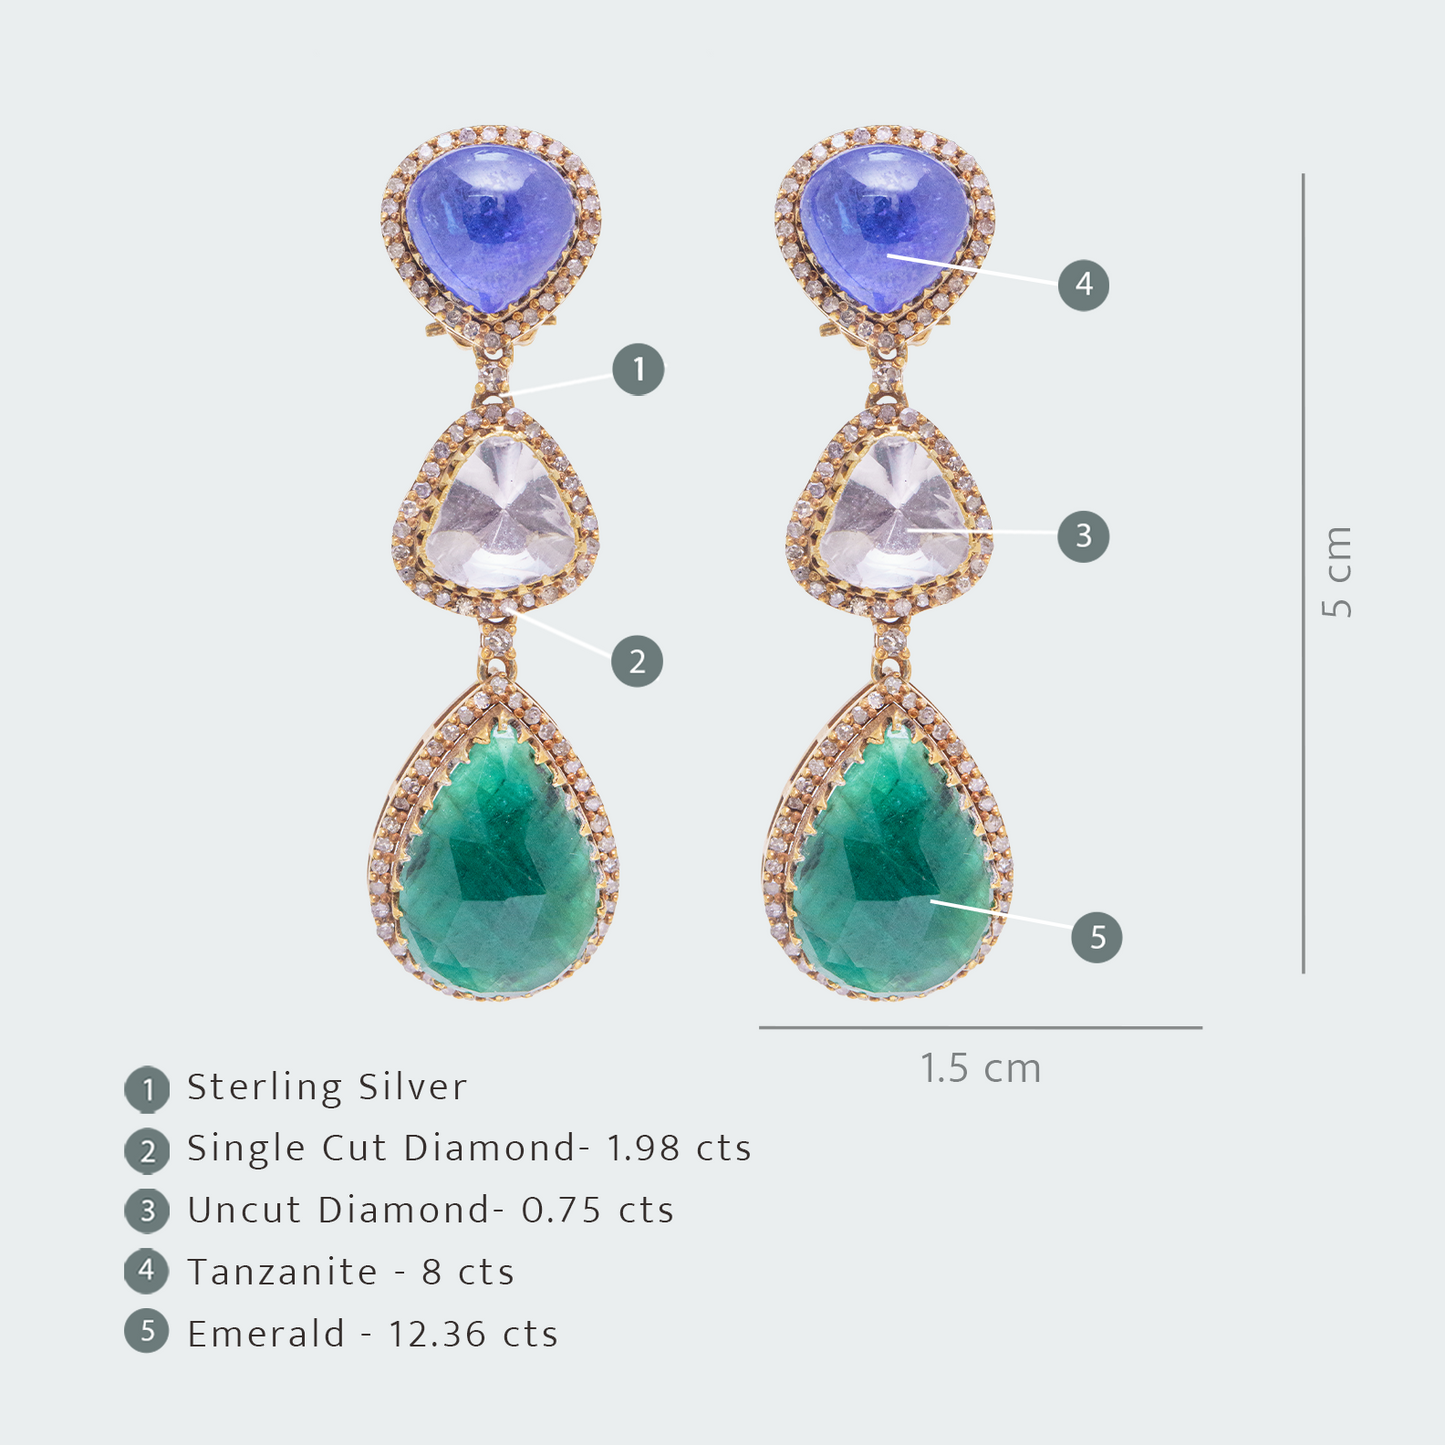 Amberosia Tanzanite and Emerald Uncut Diamond Earrings